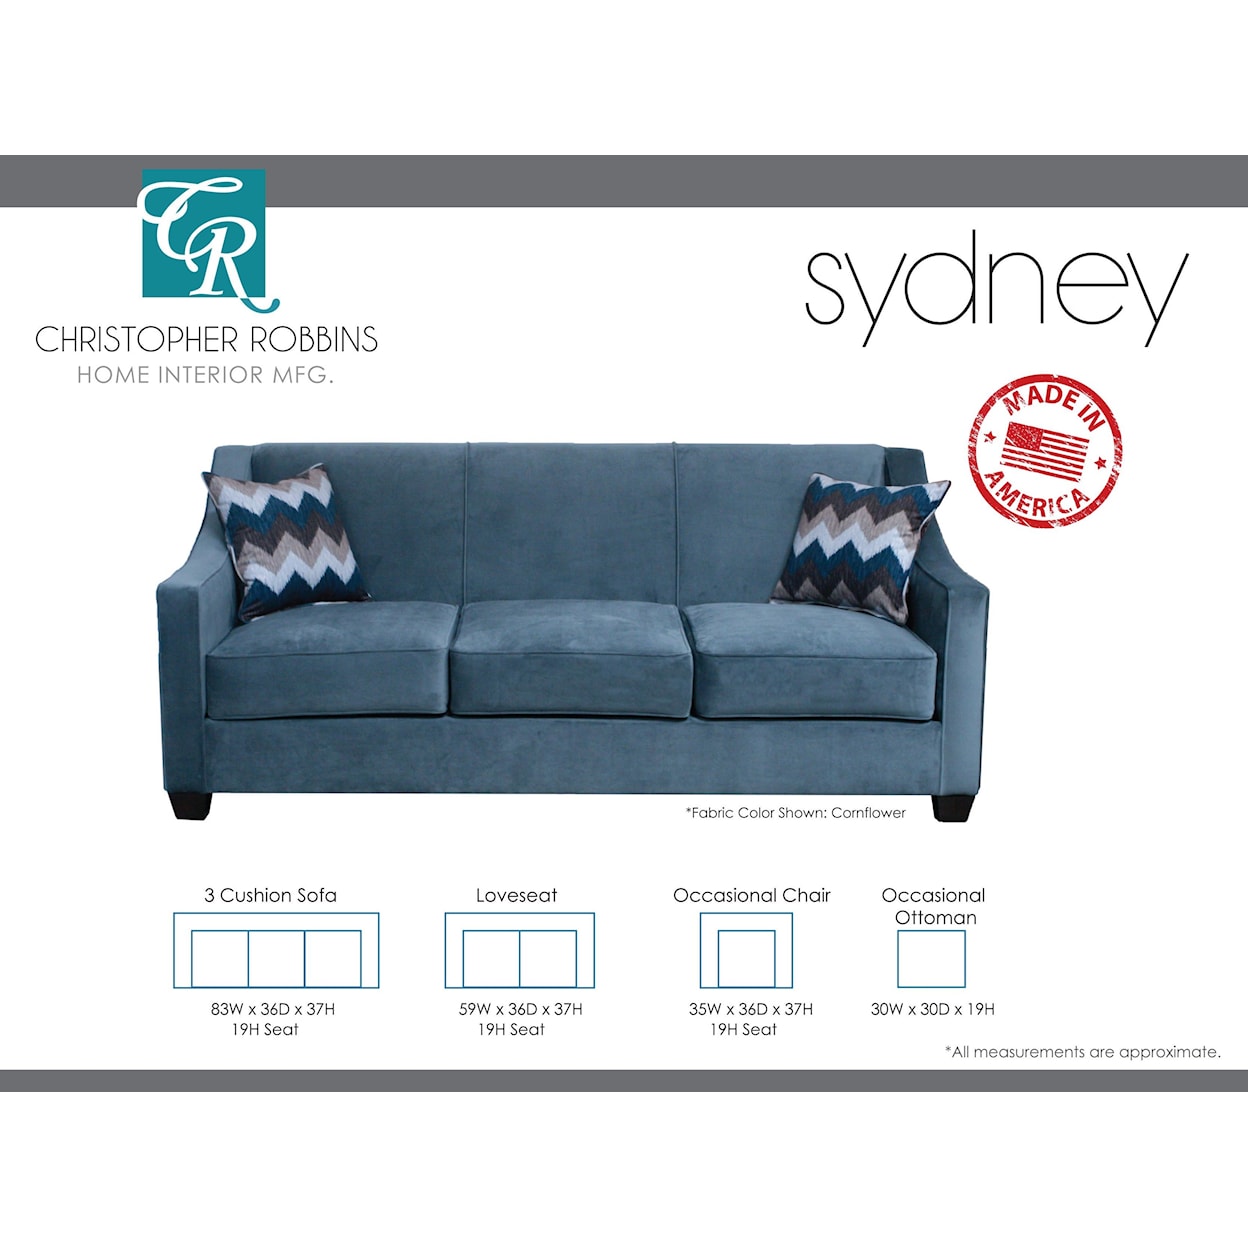 Sussex Upholstery Co. Sydney 3 Cushion Sofa